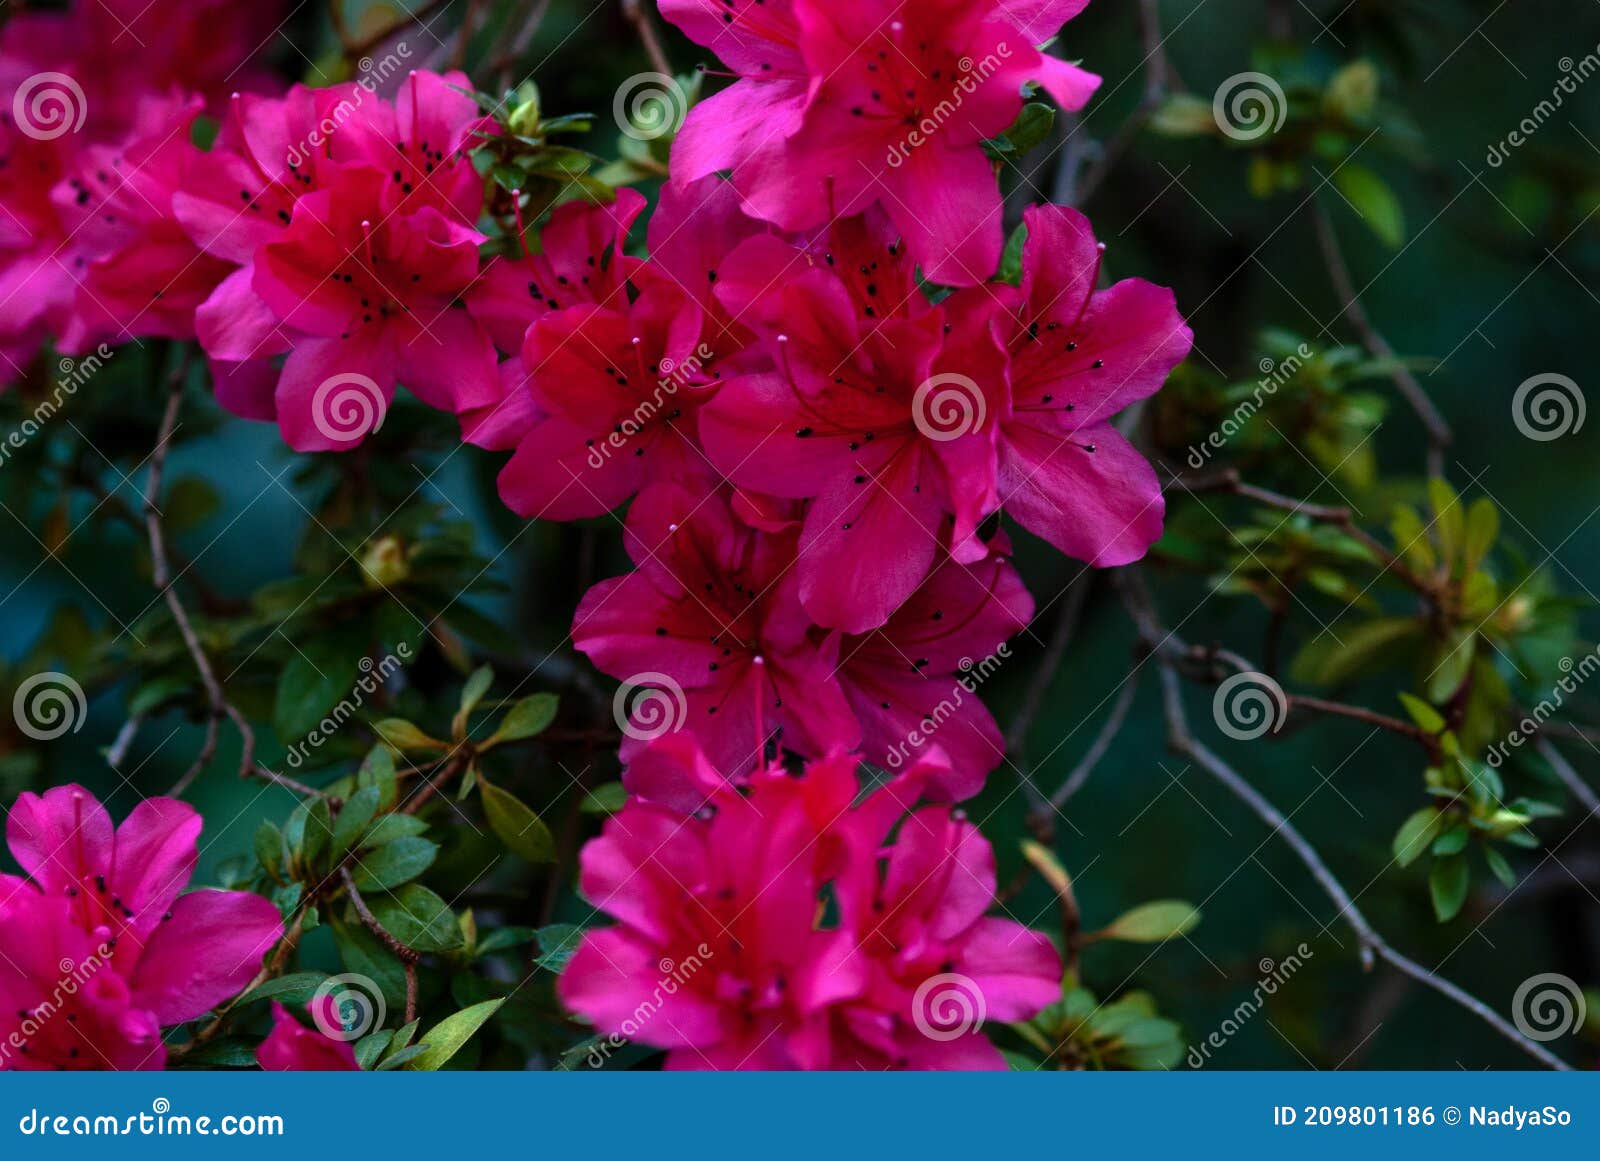 alpine rose flowering plant with crimson red flowers closeup